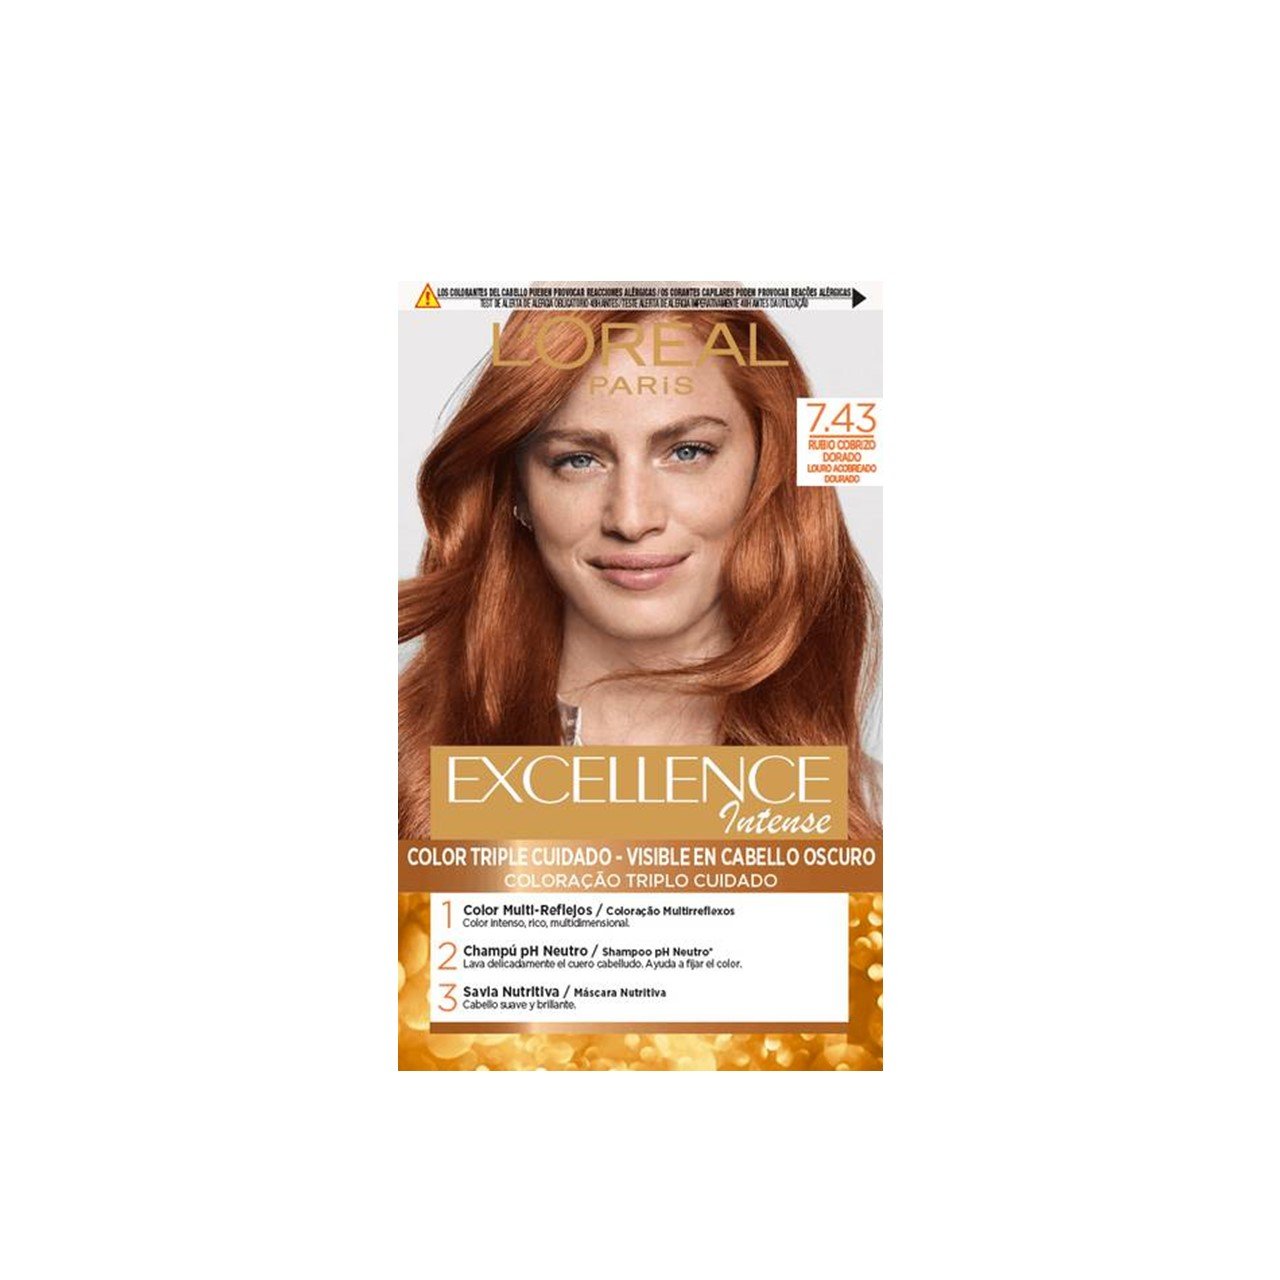 L'Oréal Paris Excellence Intense Hair Dye lupon.gov.ph